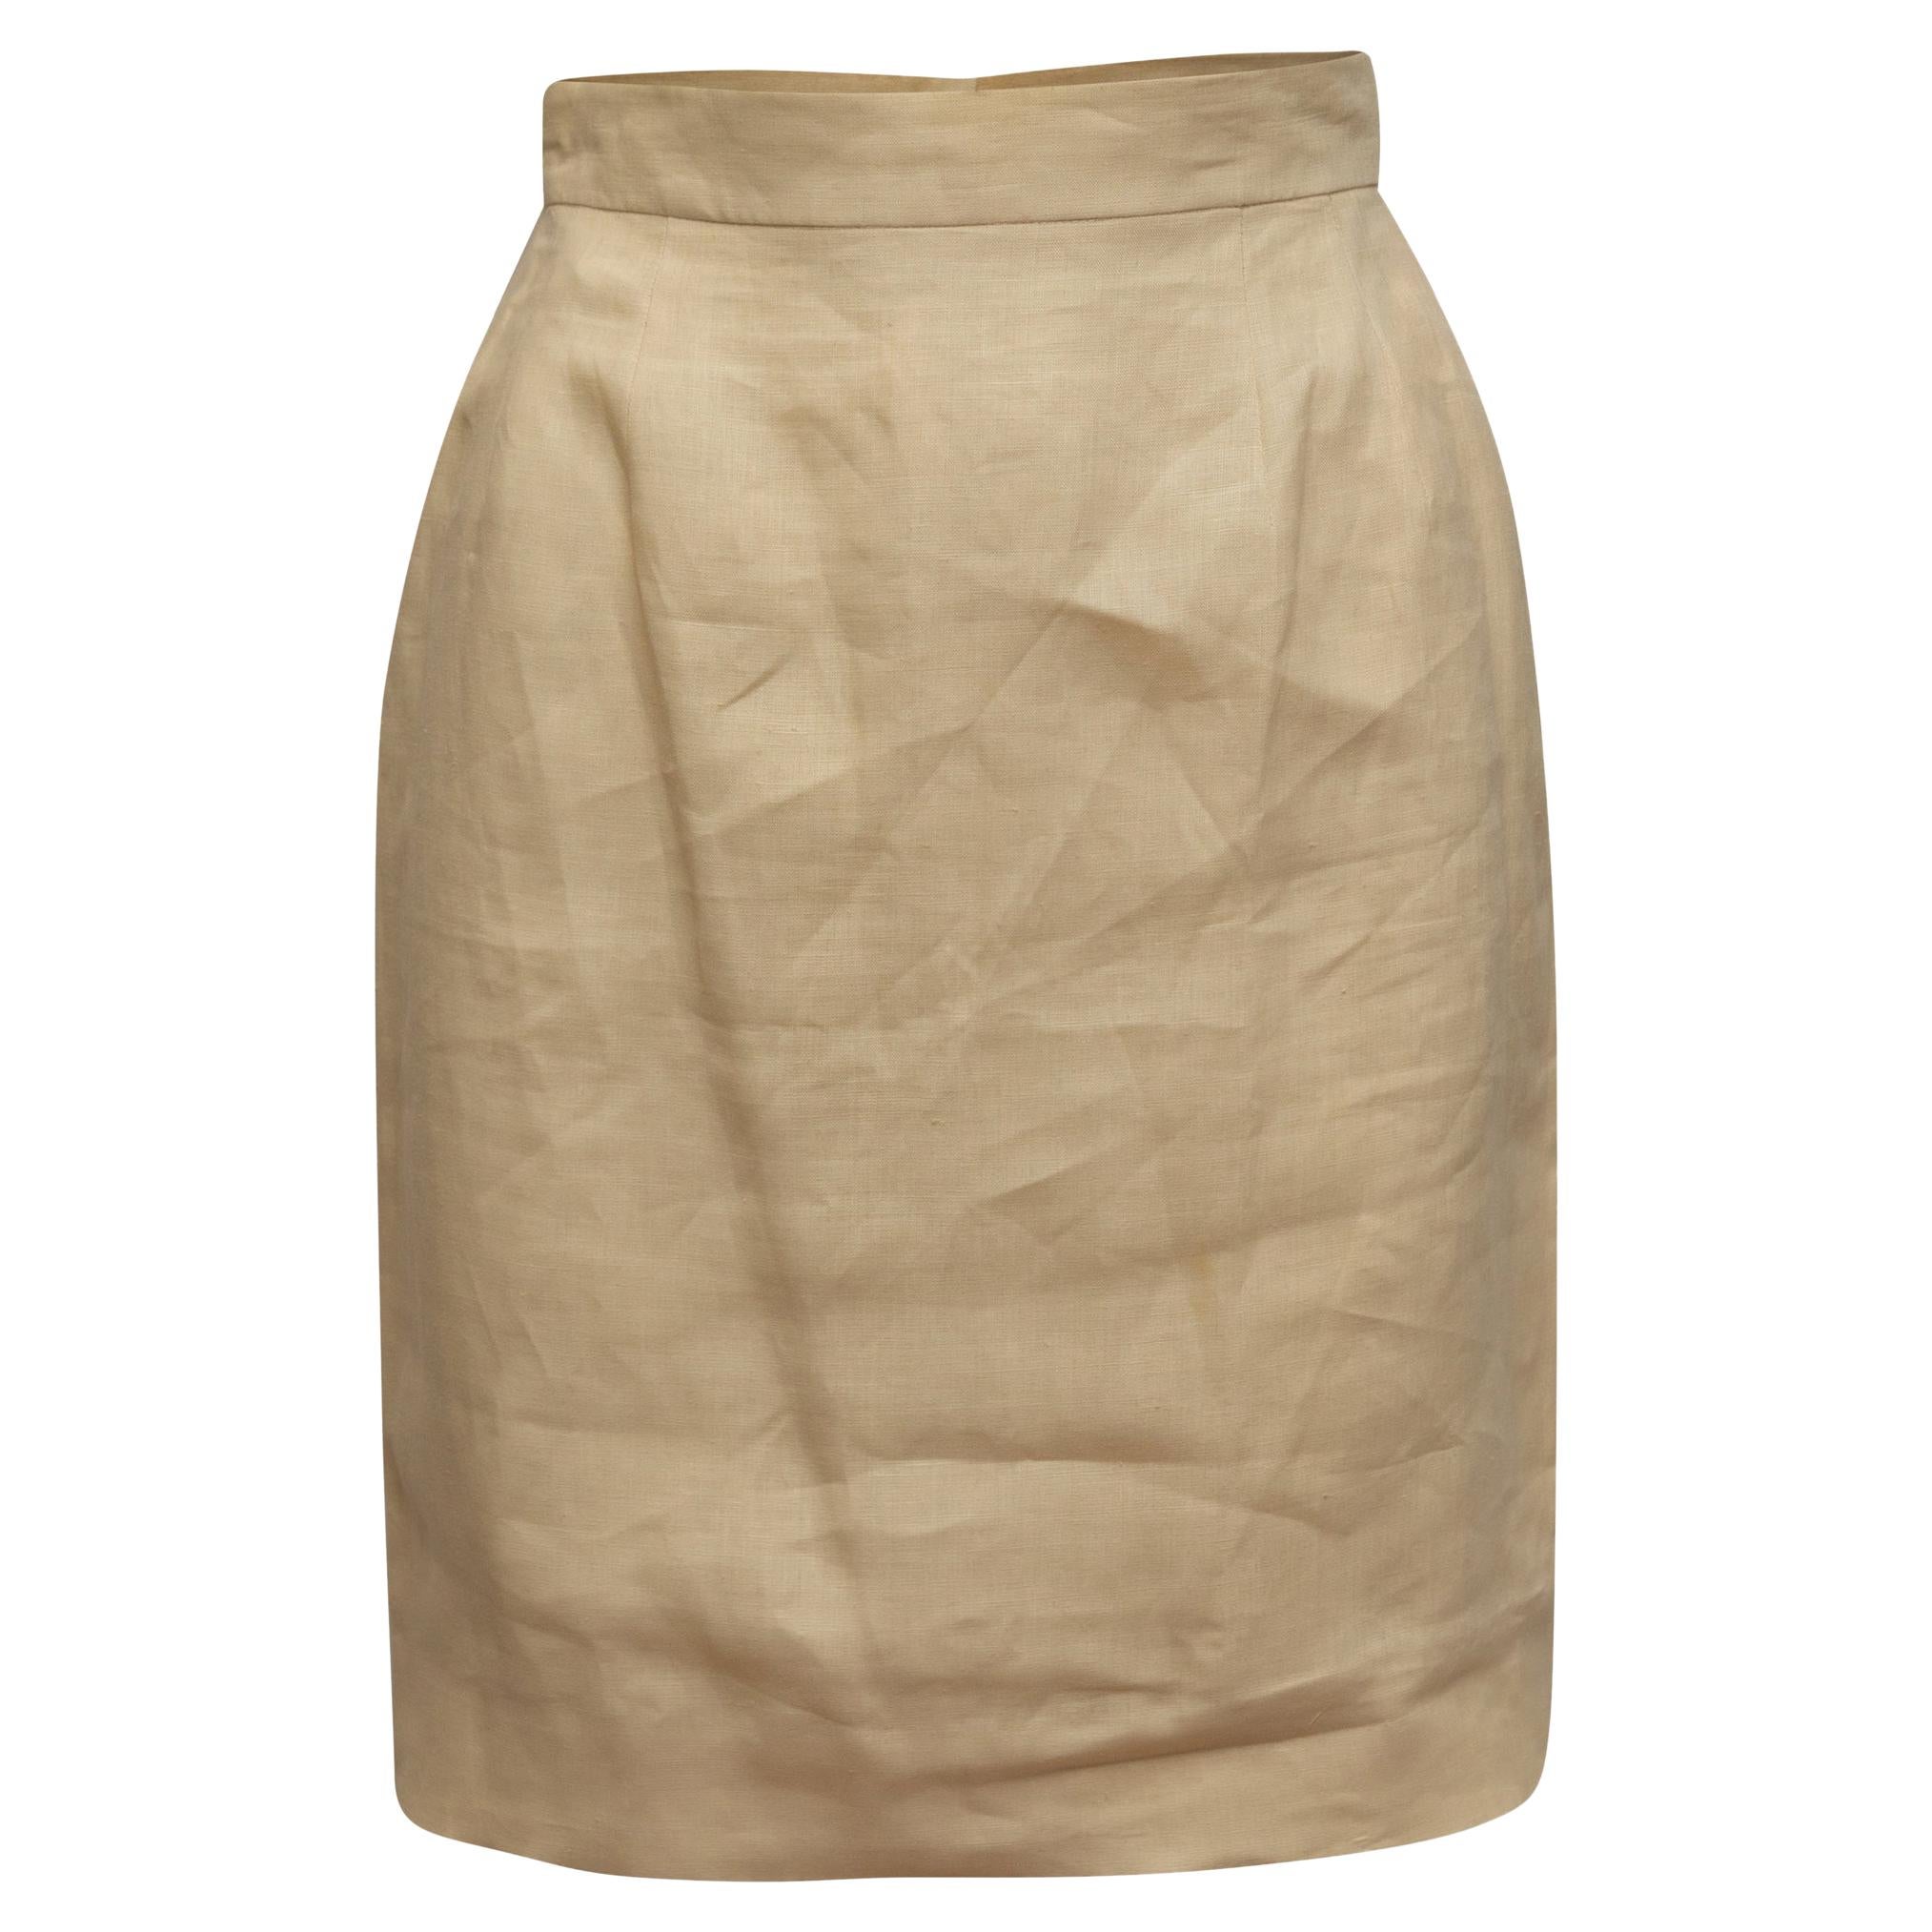 Chanel Boutique Beige Linen Skirt